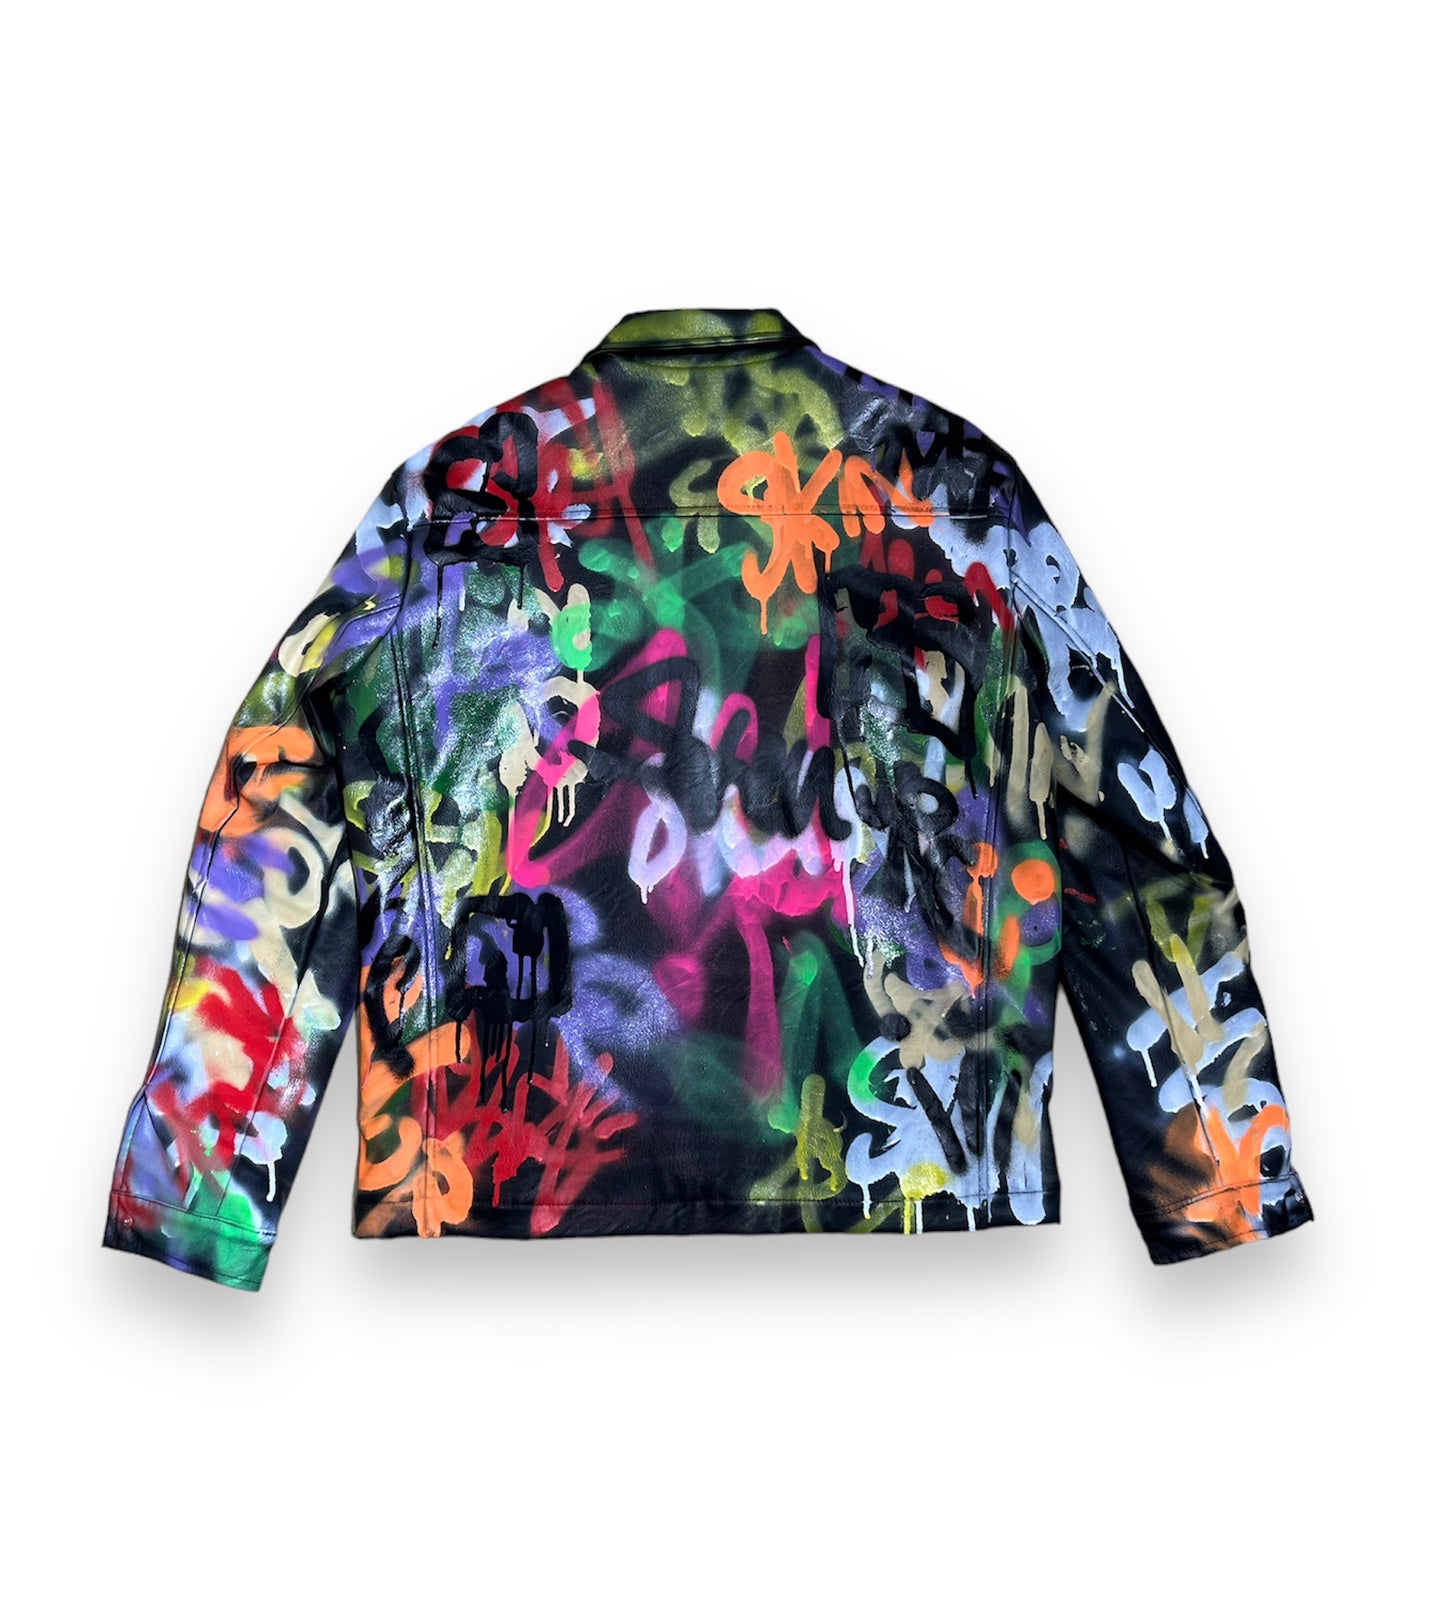 graffiti jacket & more